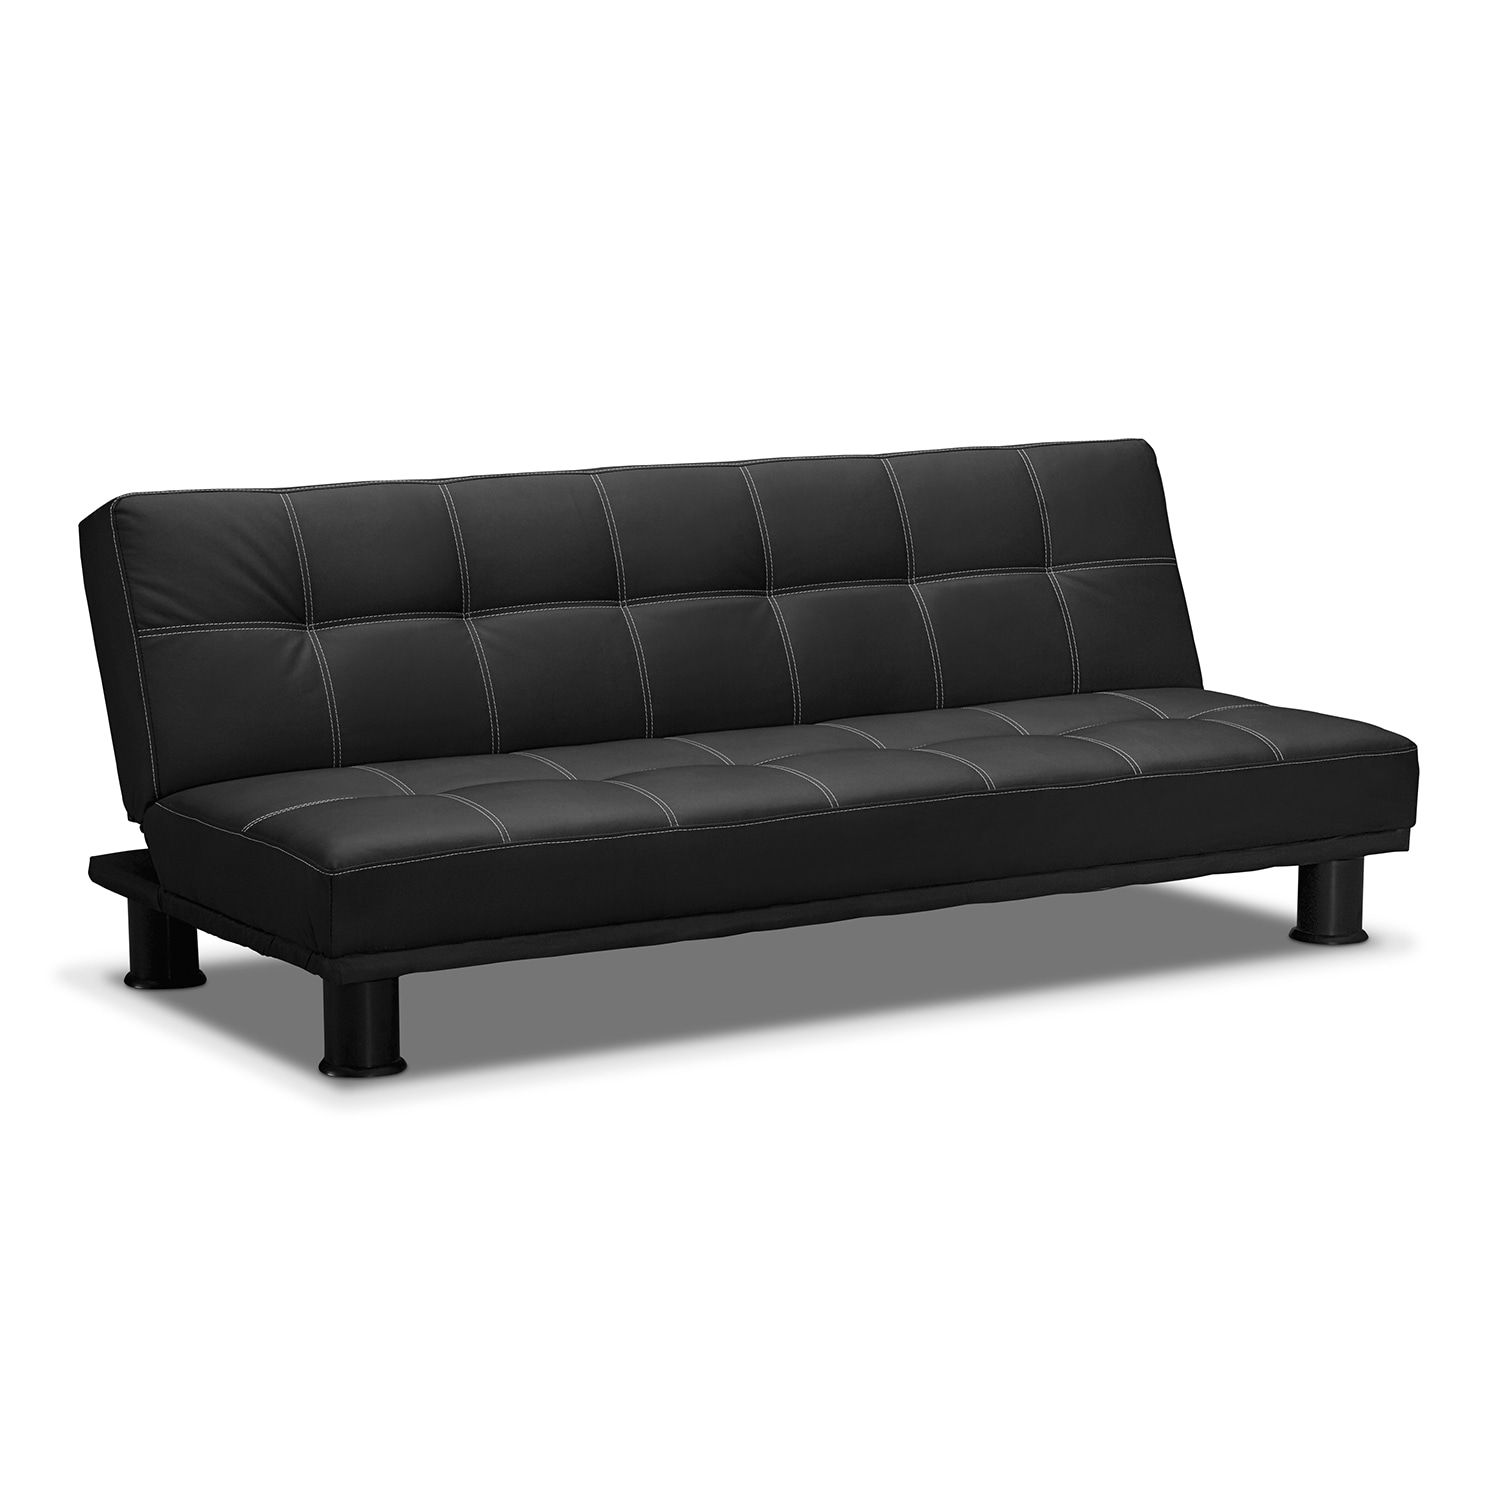 Phyllo Futon Sofa Bed - Black | Value City Furniture and Mattresses